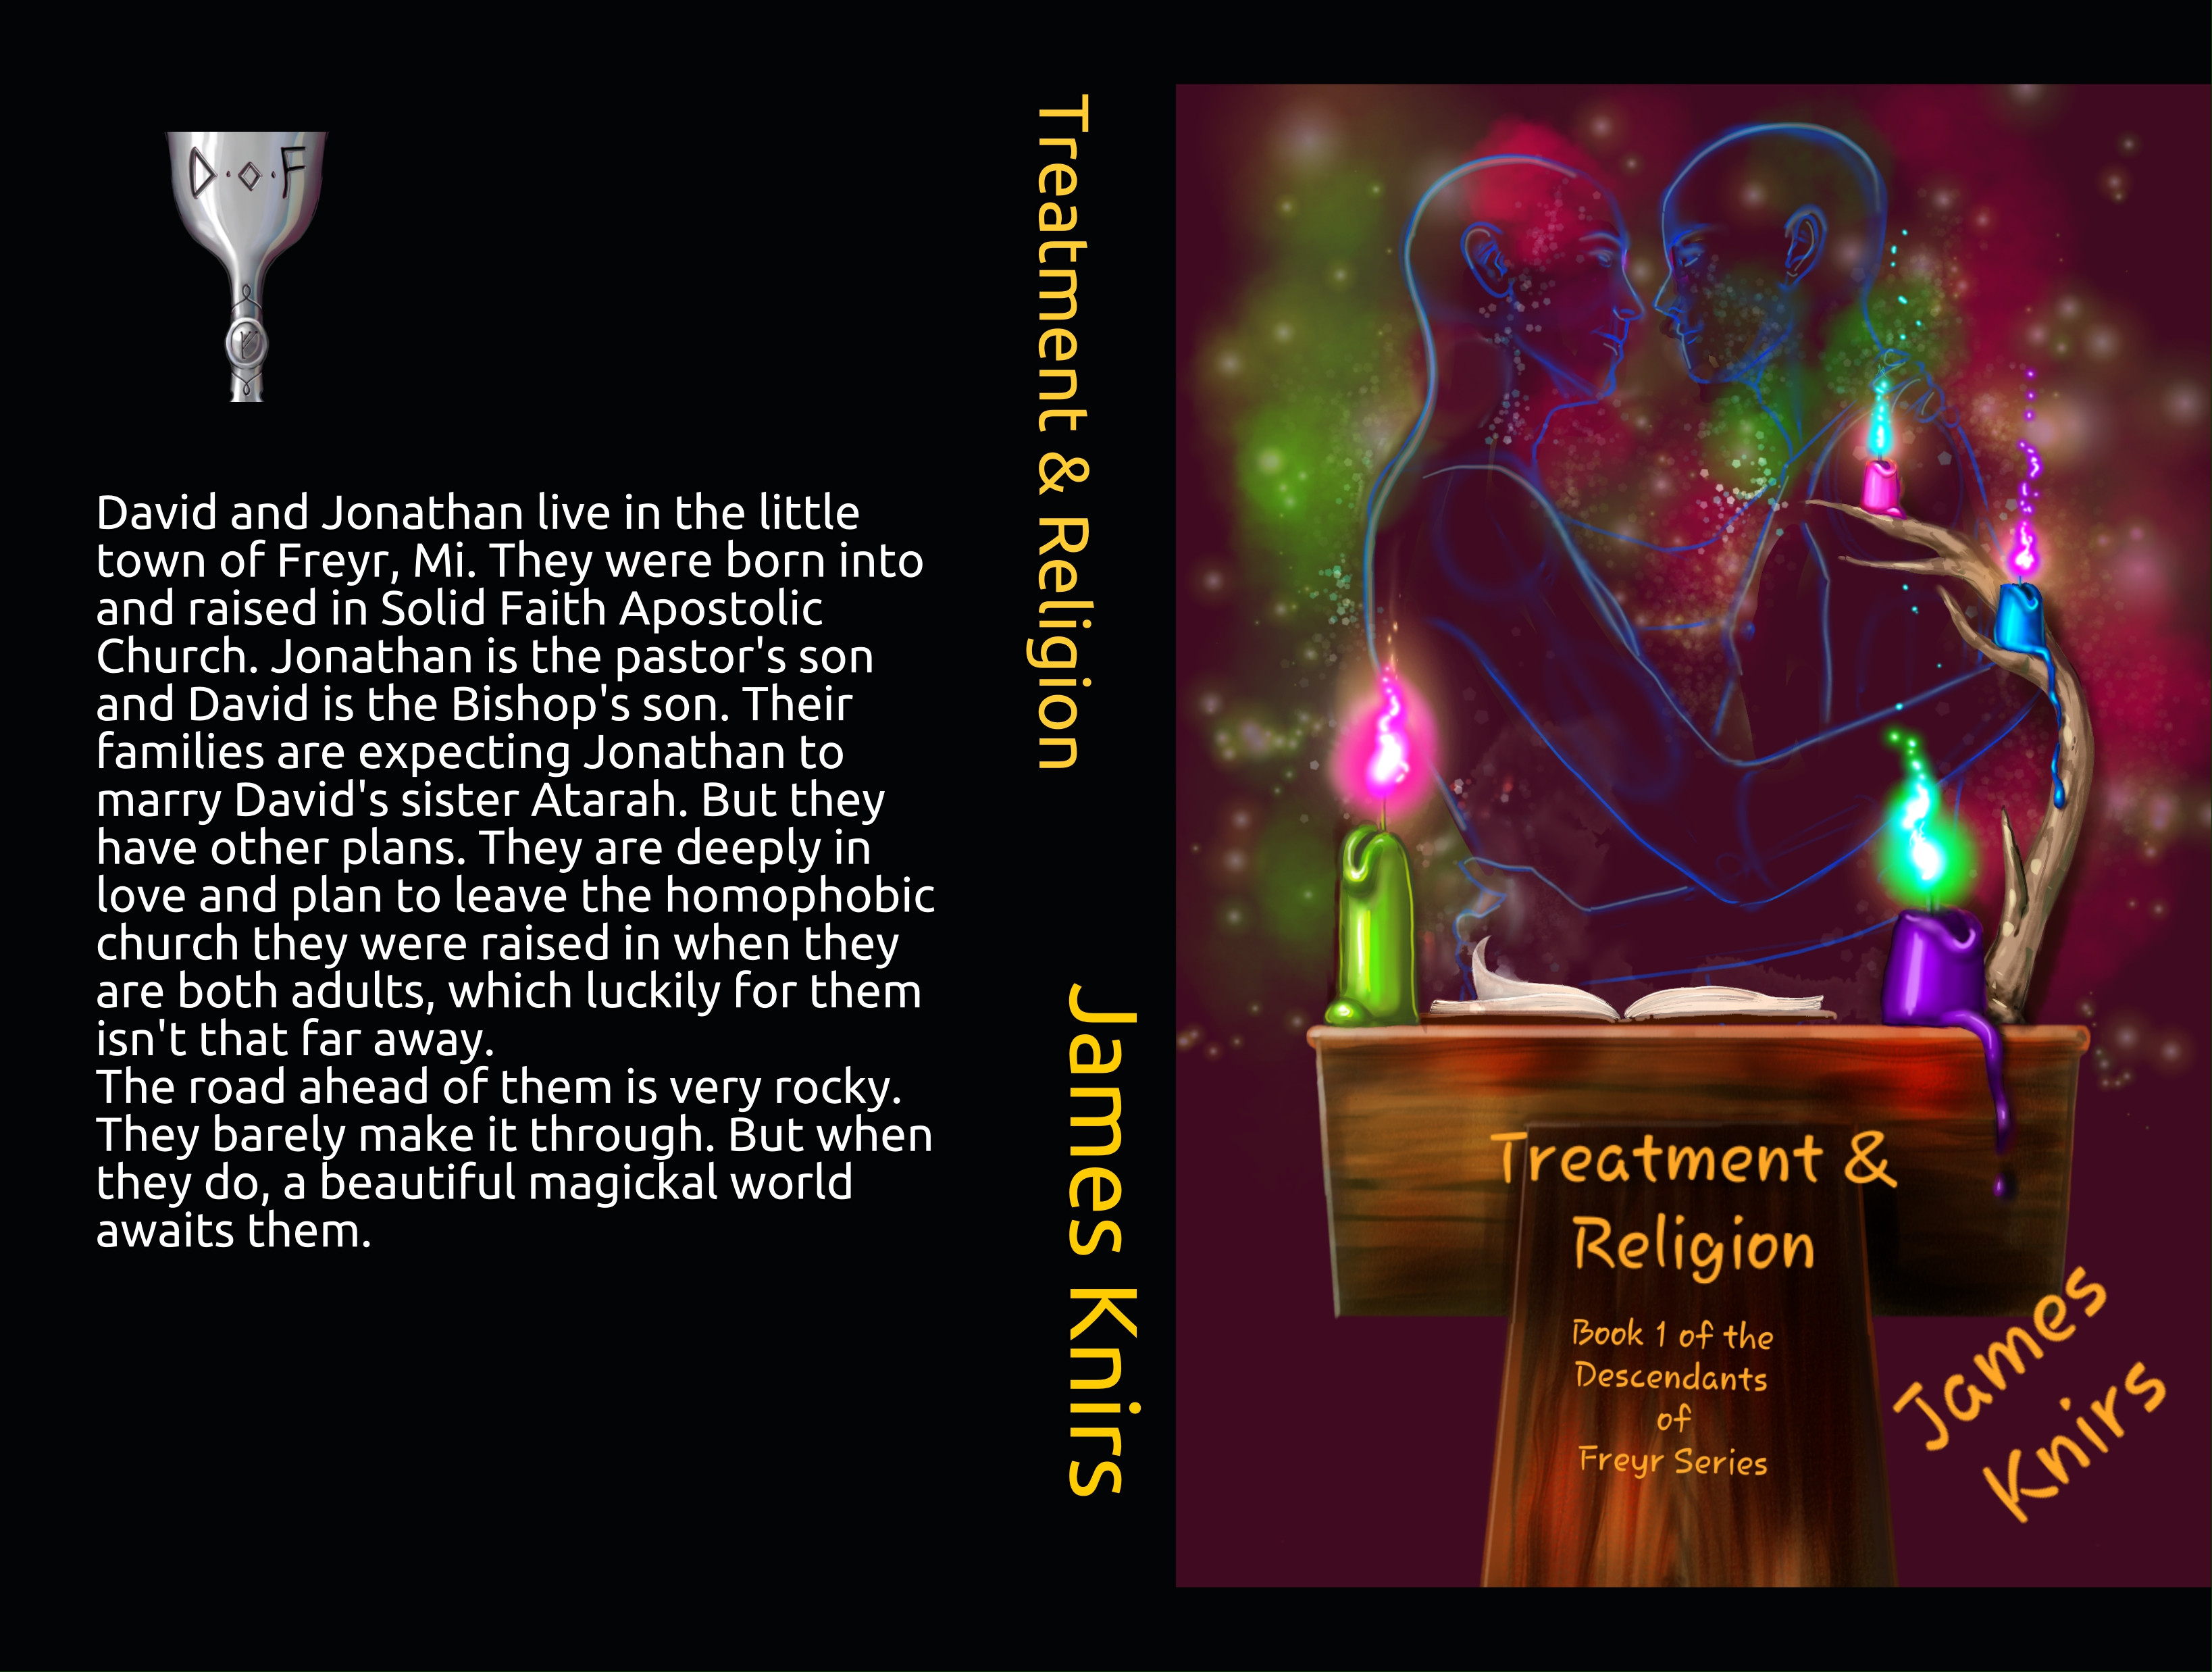 Treatment & Religion